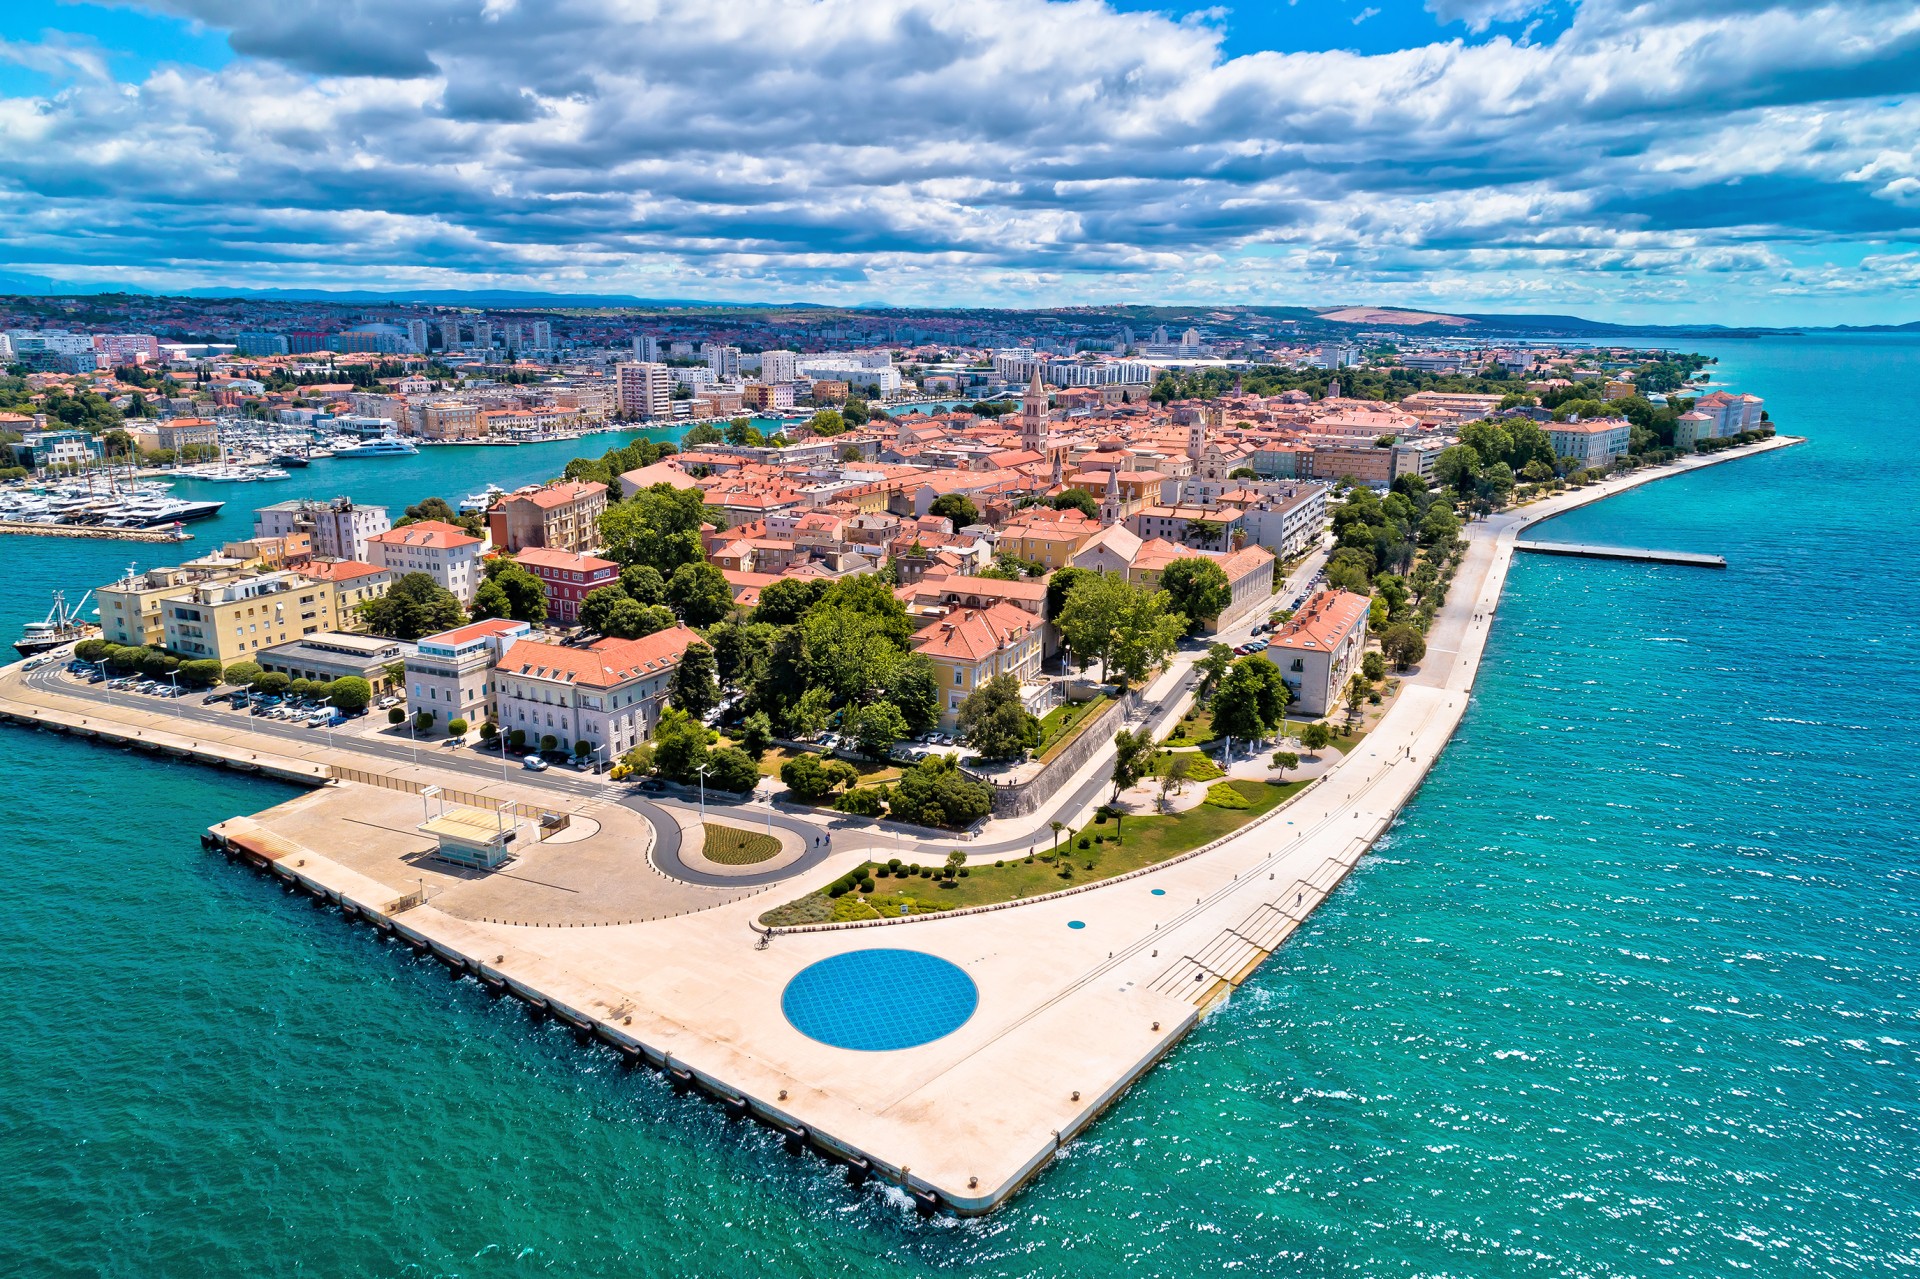 Zadar – Historical center of Dalmatia